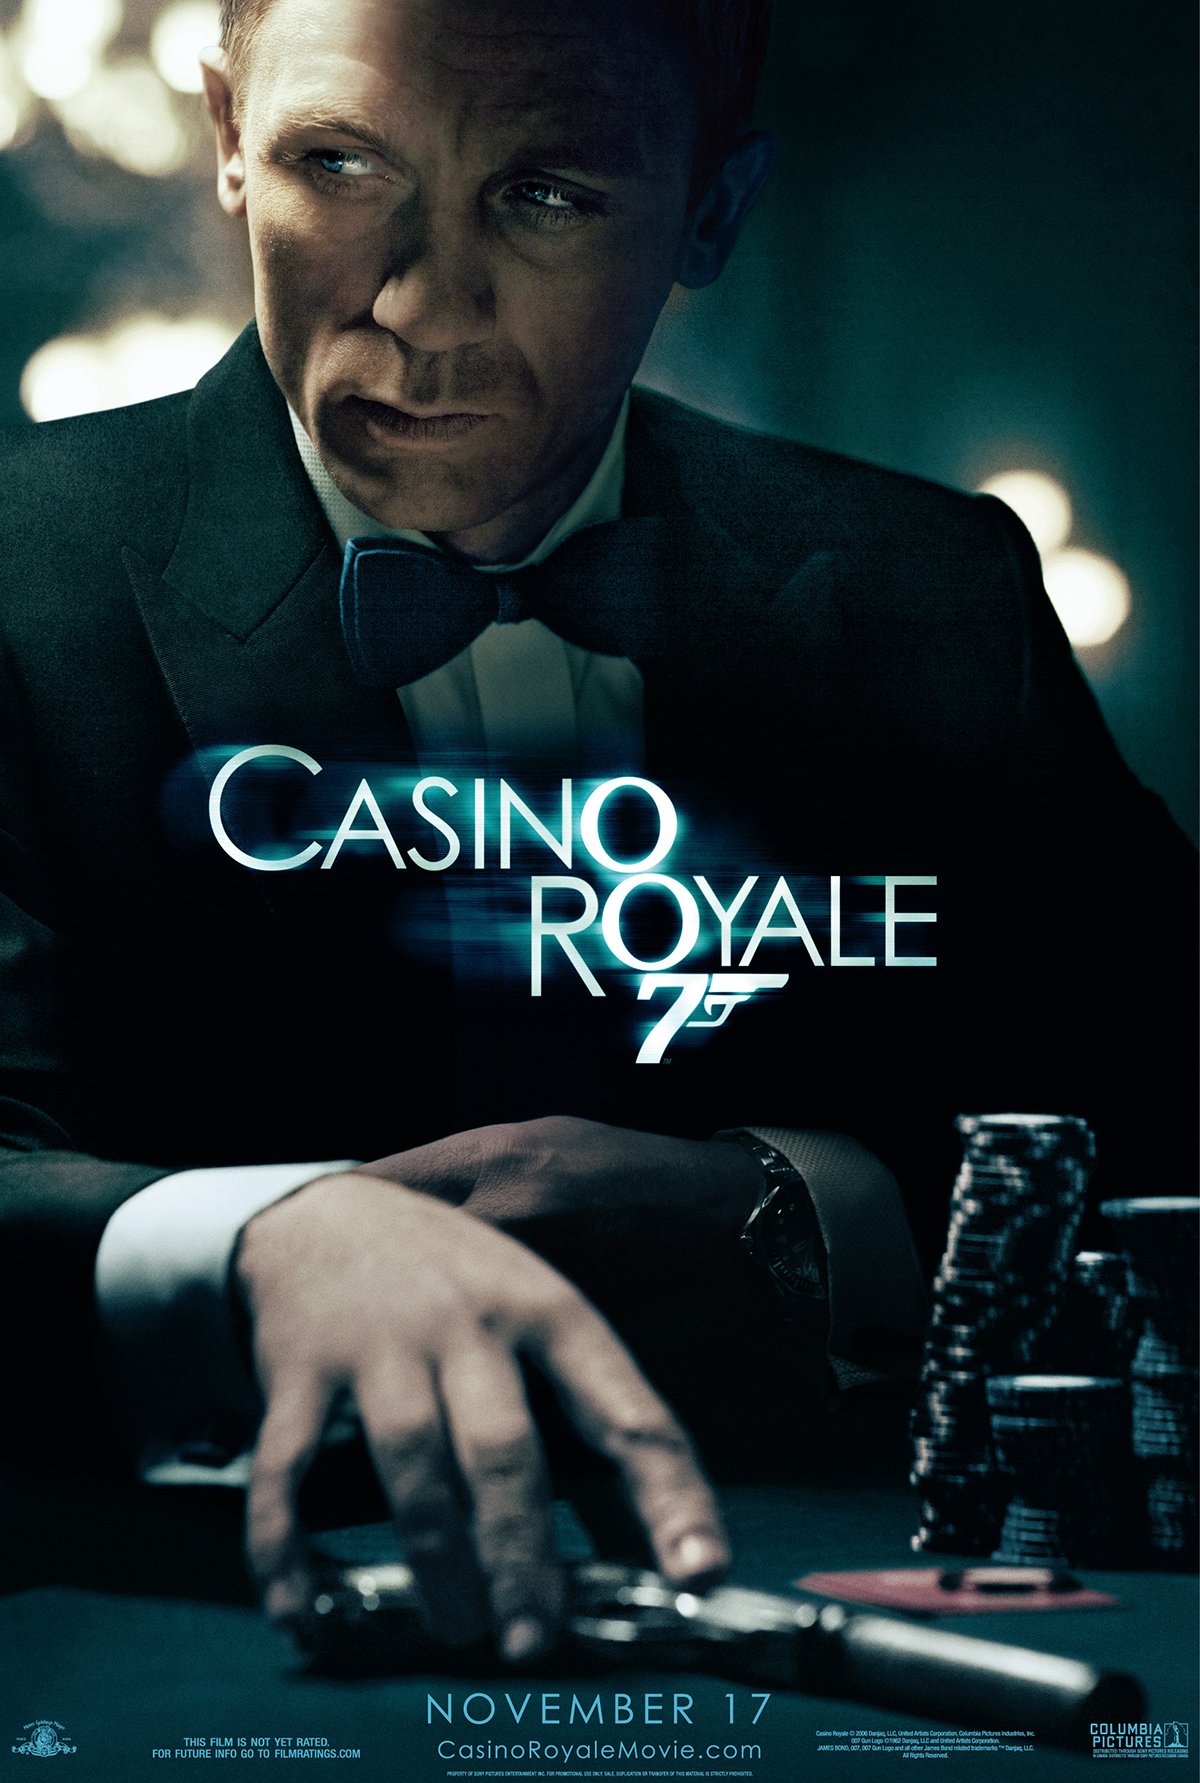 casino royale full movie online free 123